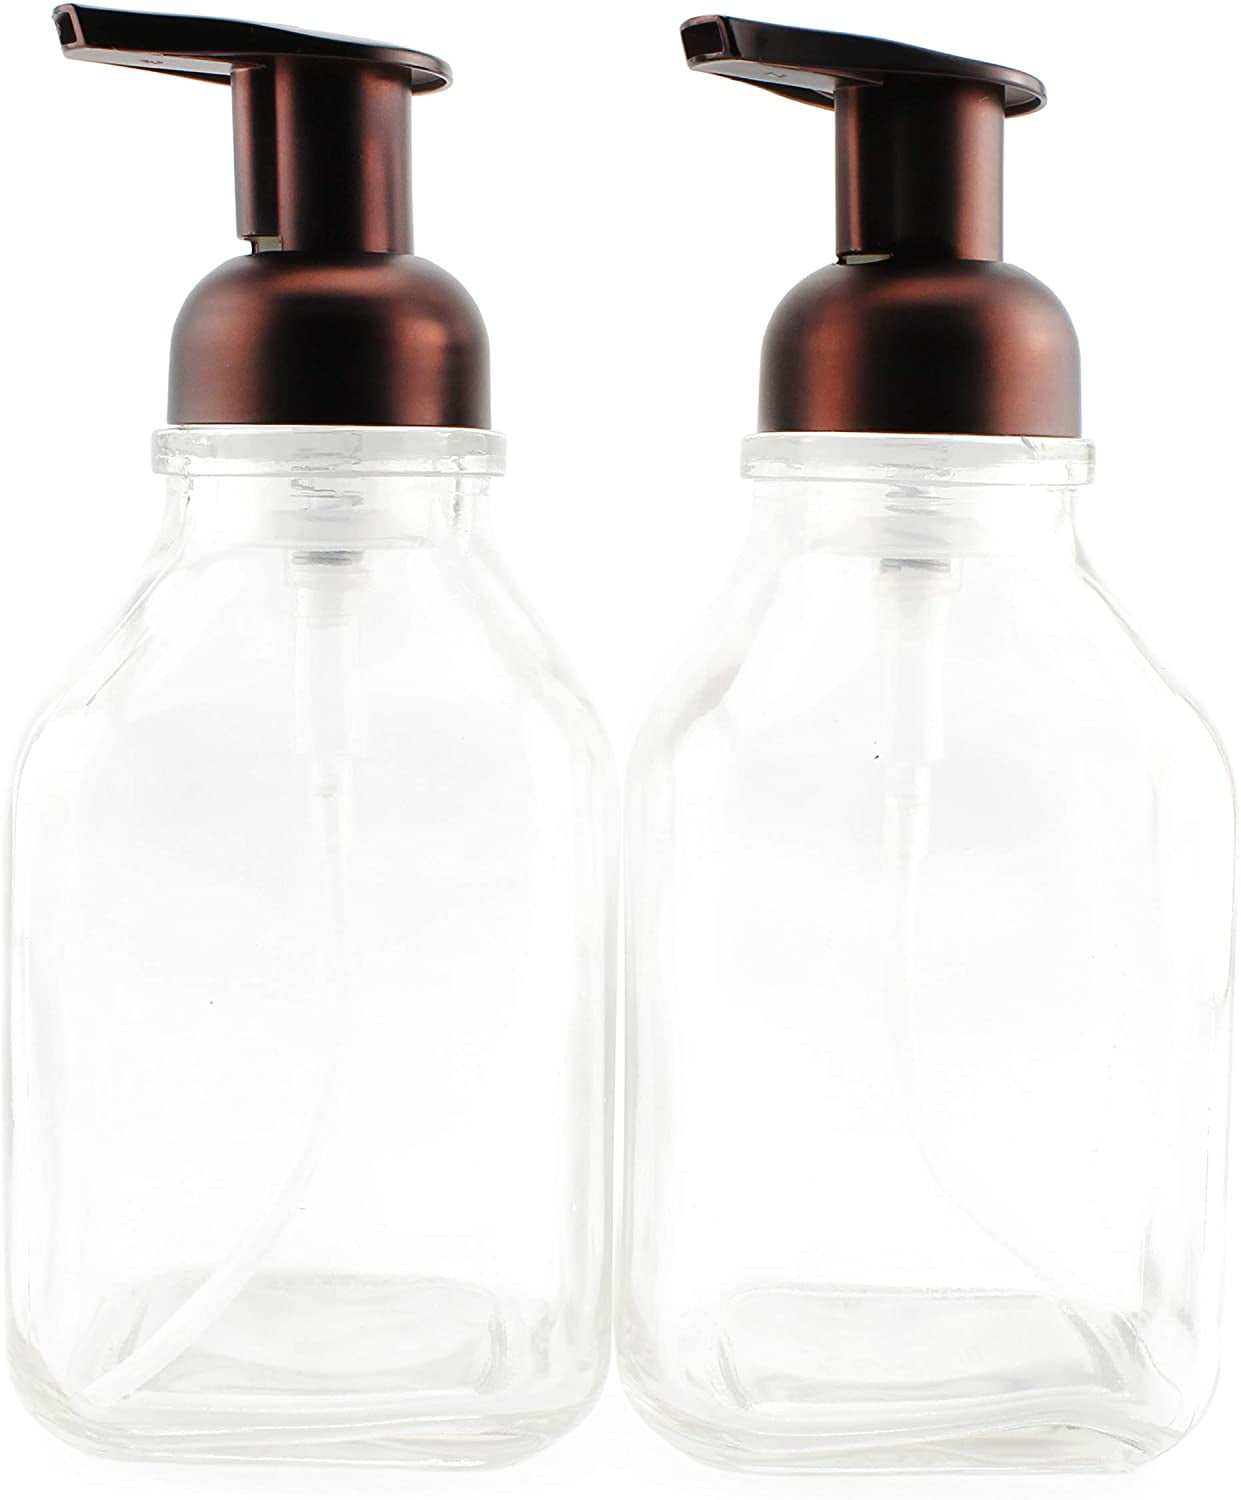 Vintage-Inspired Save on Soap Clear/Brushed Compact Design mDesign Modern Square Glass Refillable Foaming Soap Dispenser Pump Bottle for Bathroom Vanity Countertop Kitchen Sink